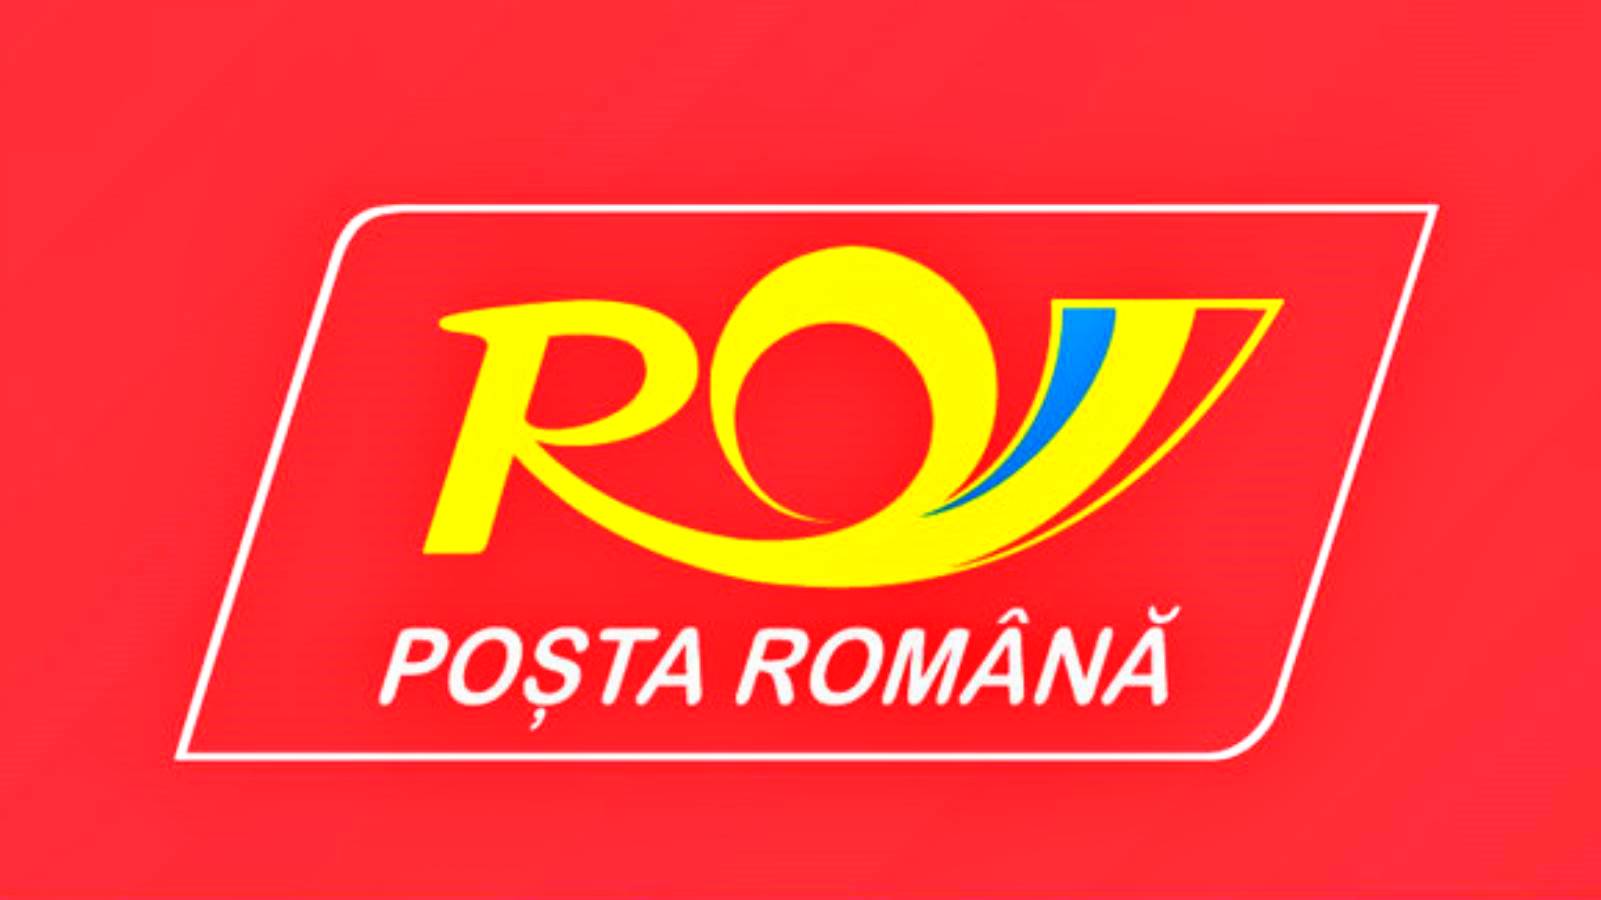 Die rumänische Post liefert online gesendetes Geld per Postmandat